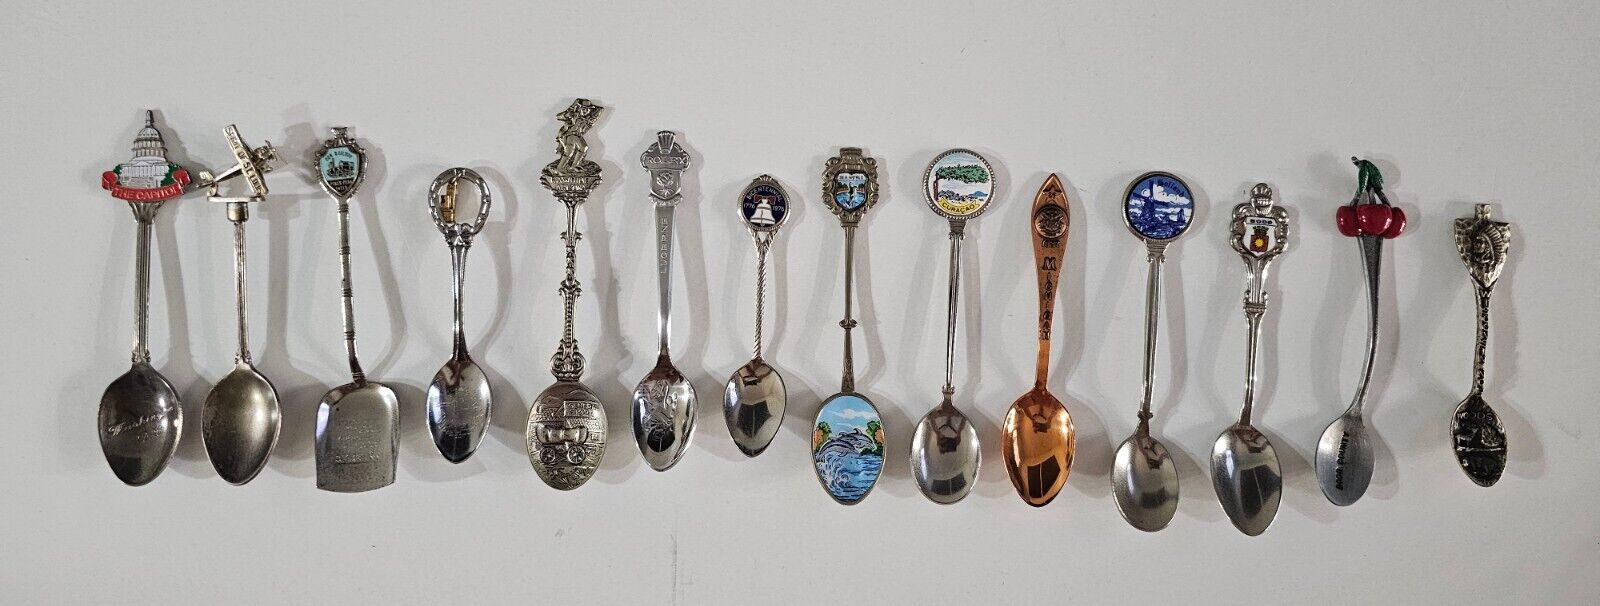 Collector Souvenir Spoons (Lot of 14)